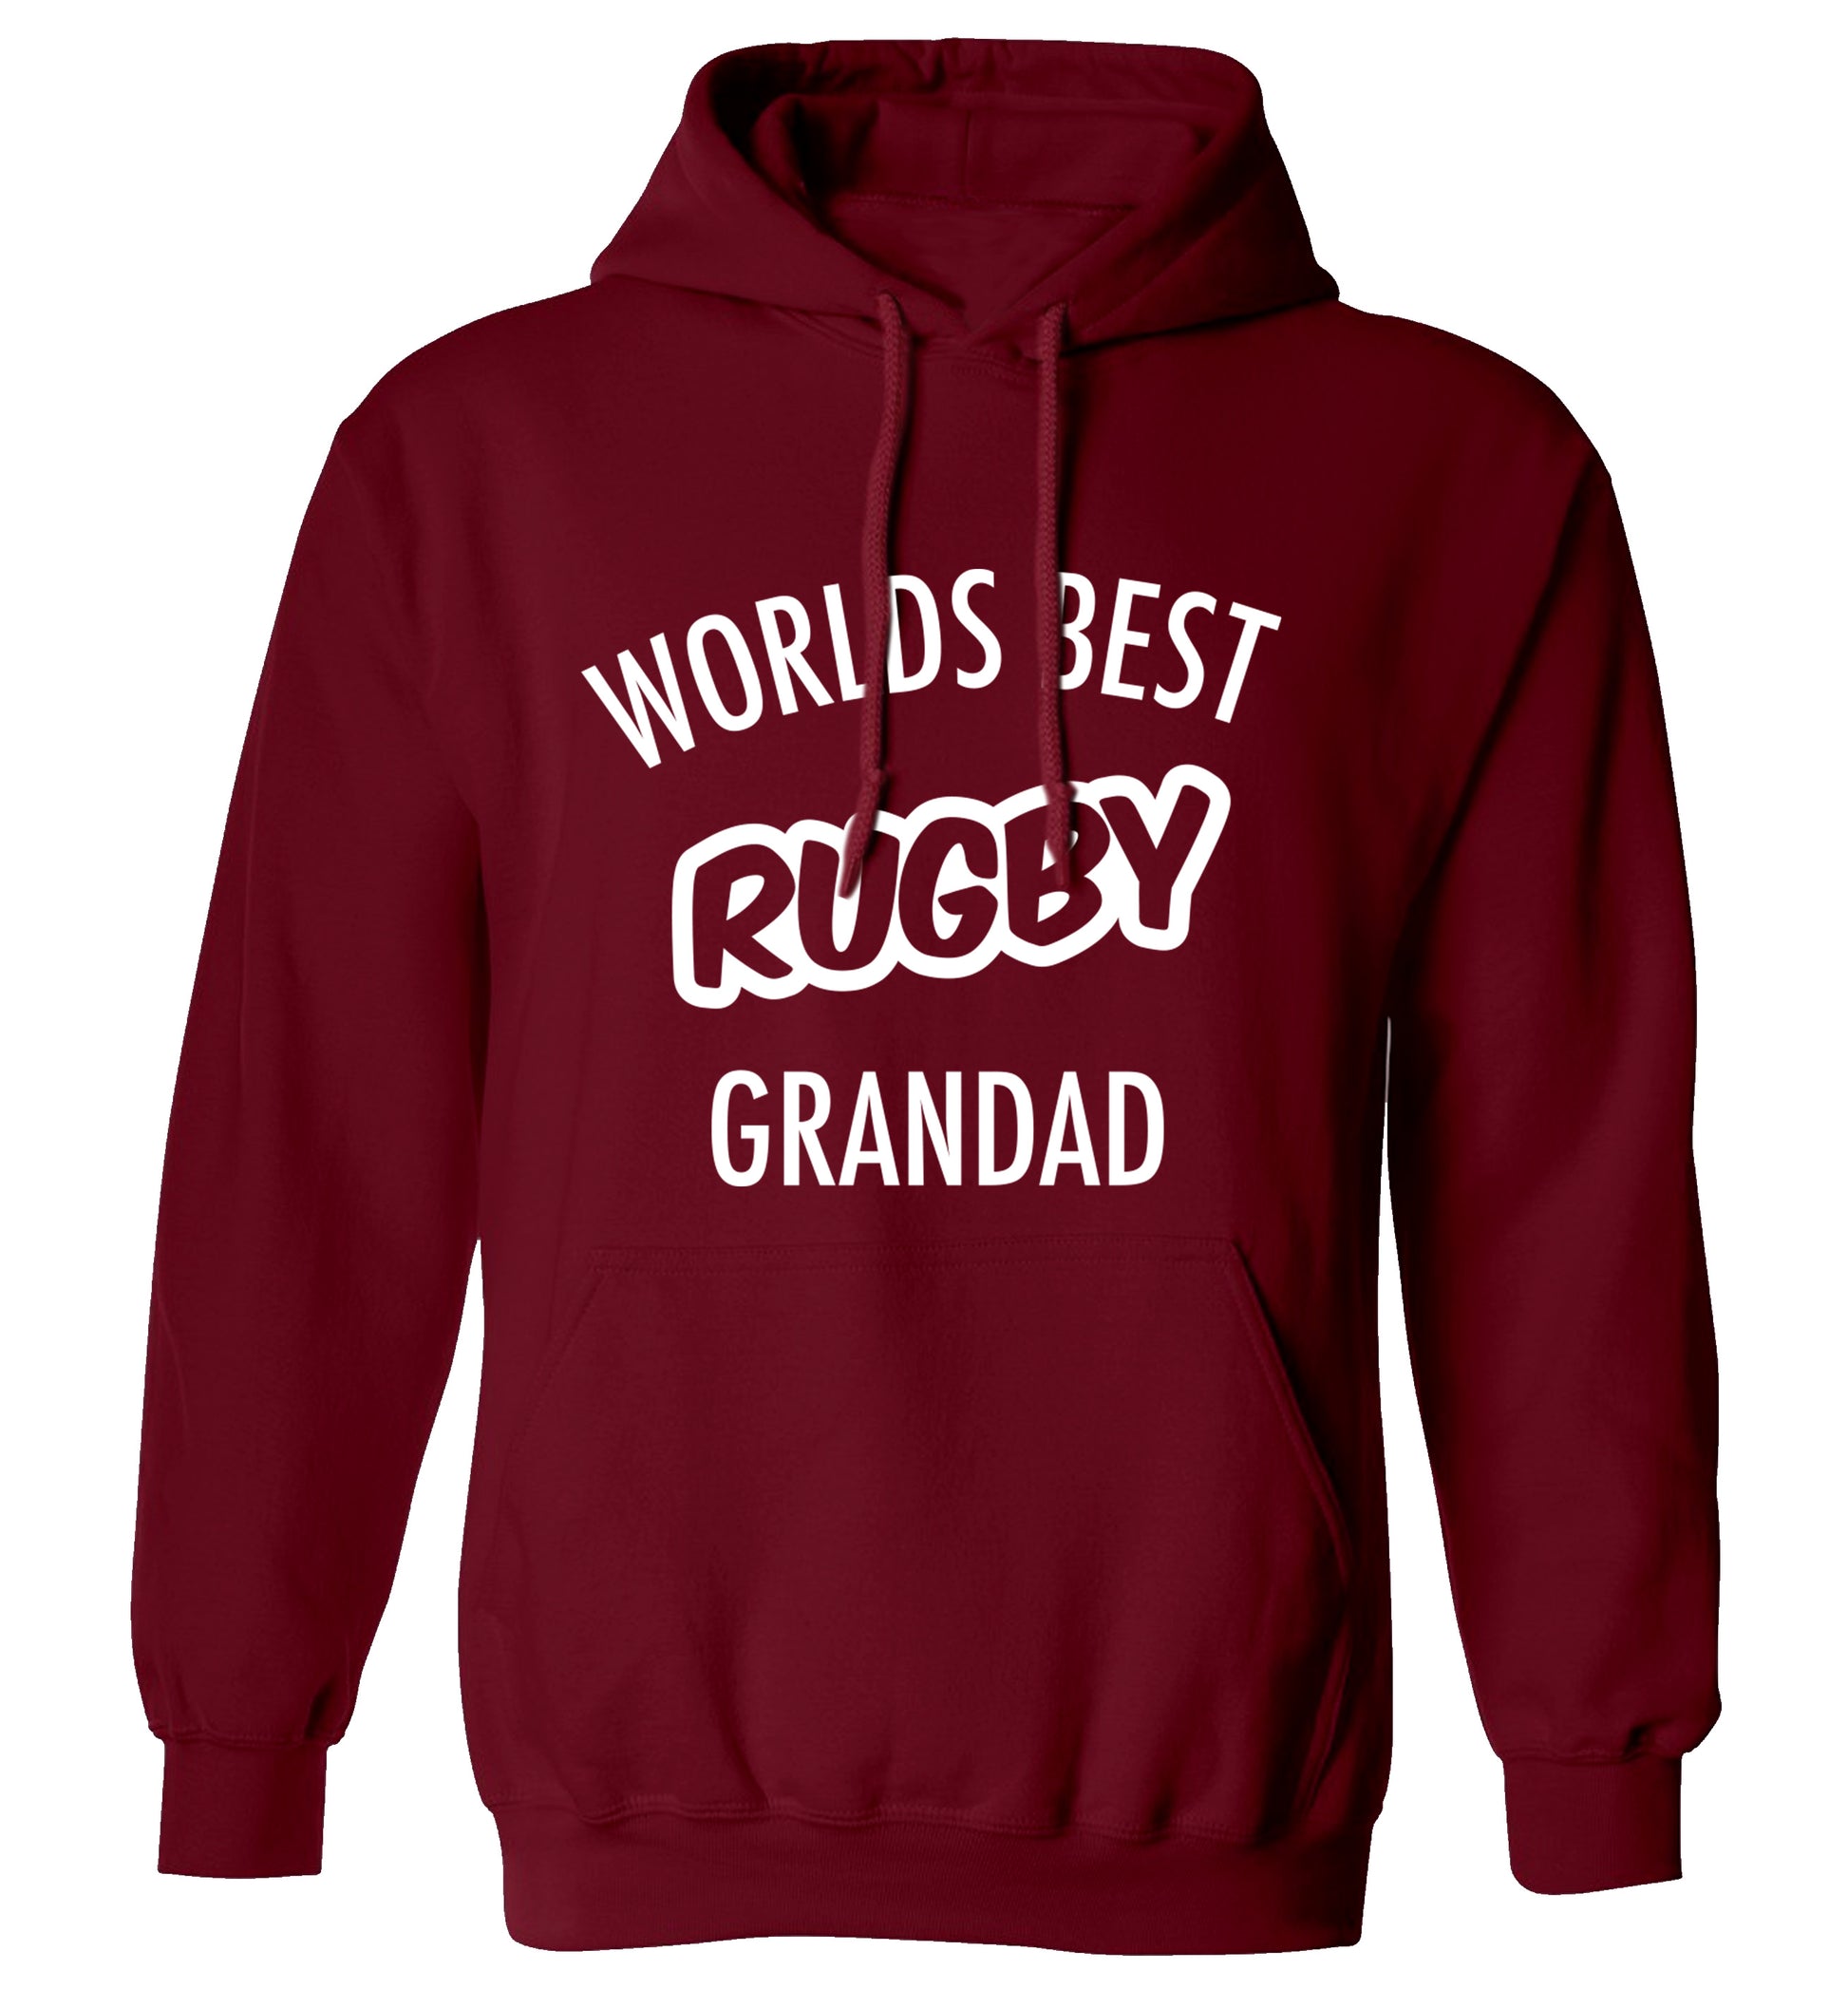 Worlds best rugby grandad adults unisex maroon hoodie 2XL